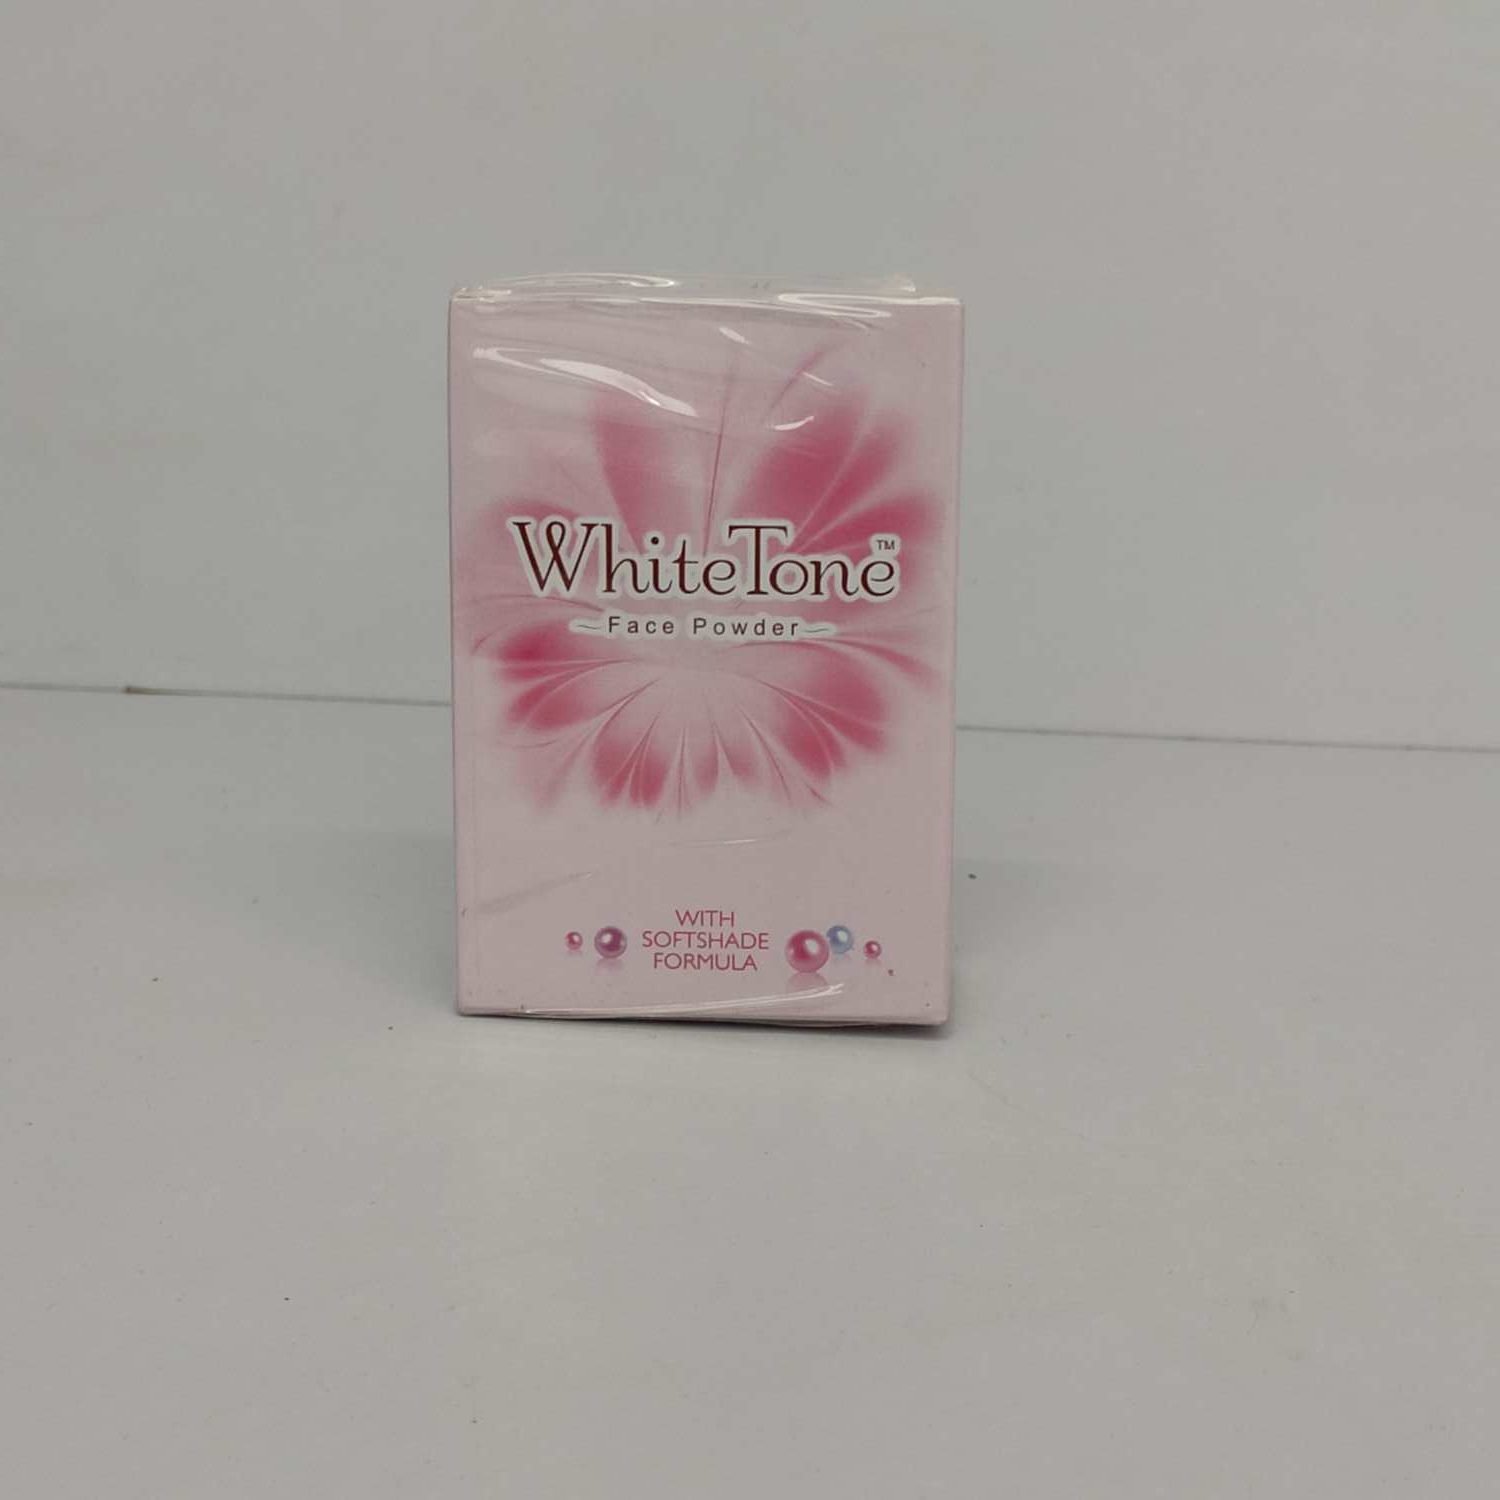 Whitetone face powder with softshade formula, 50 grams